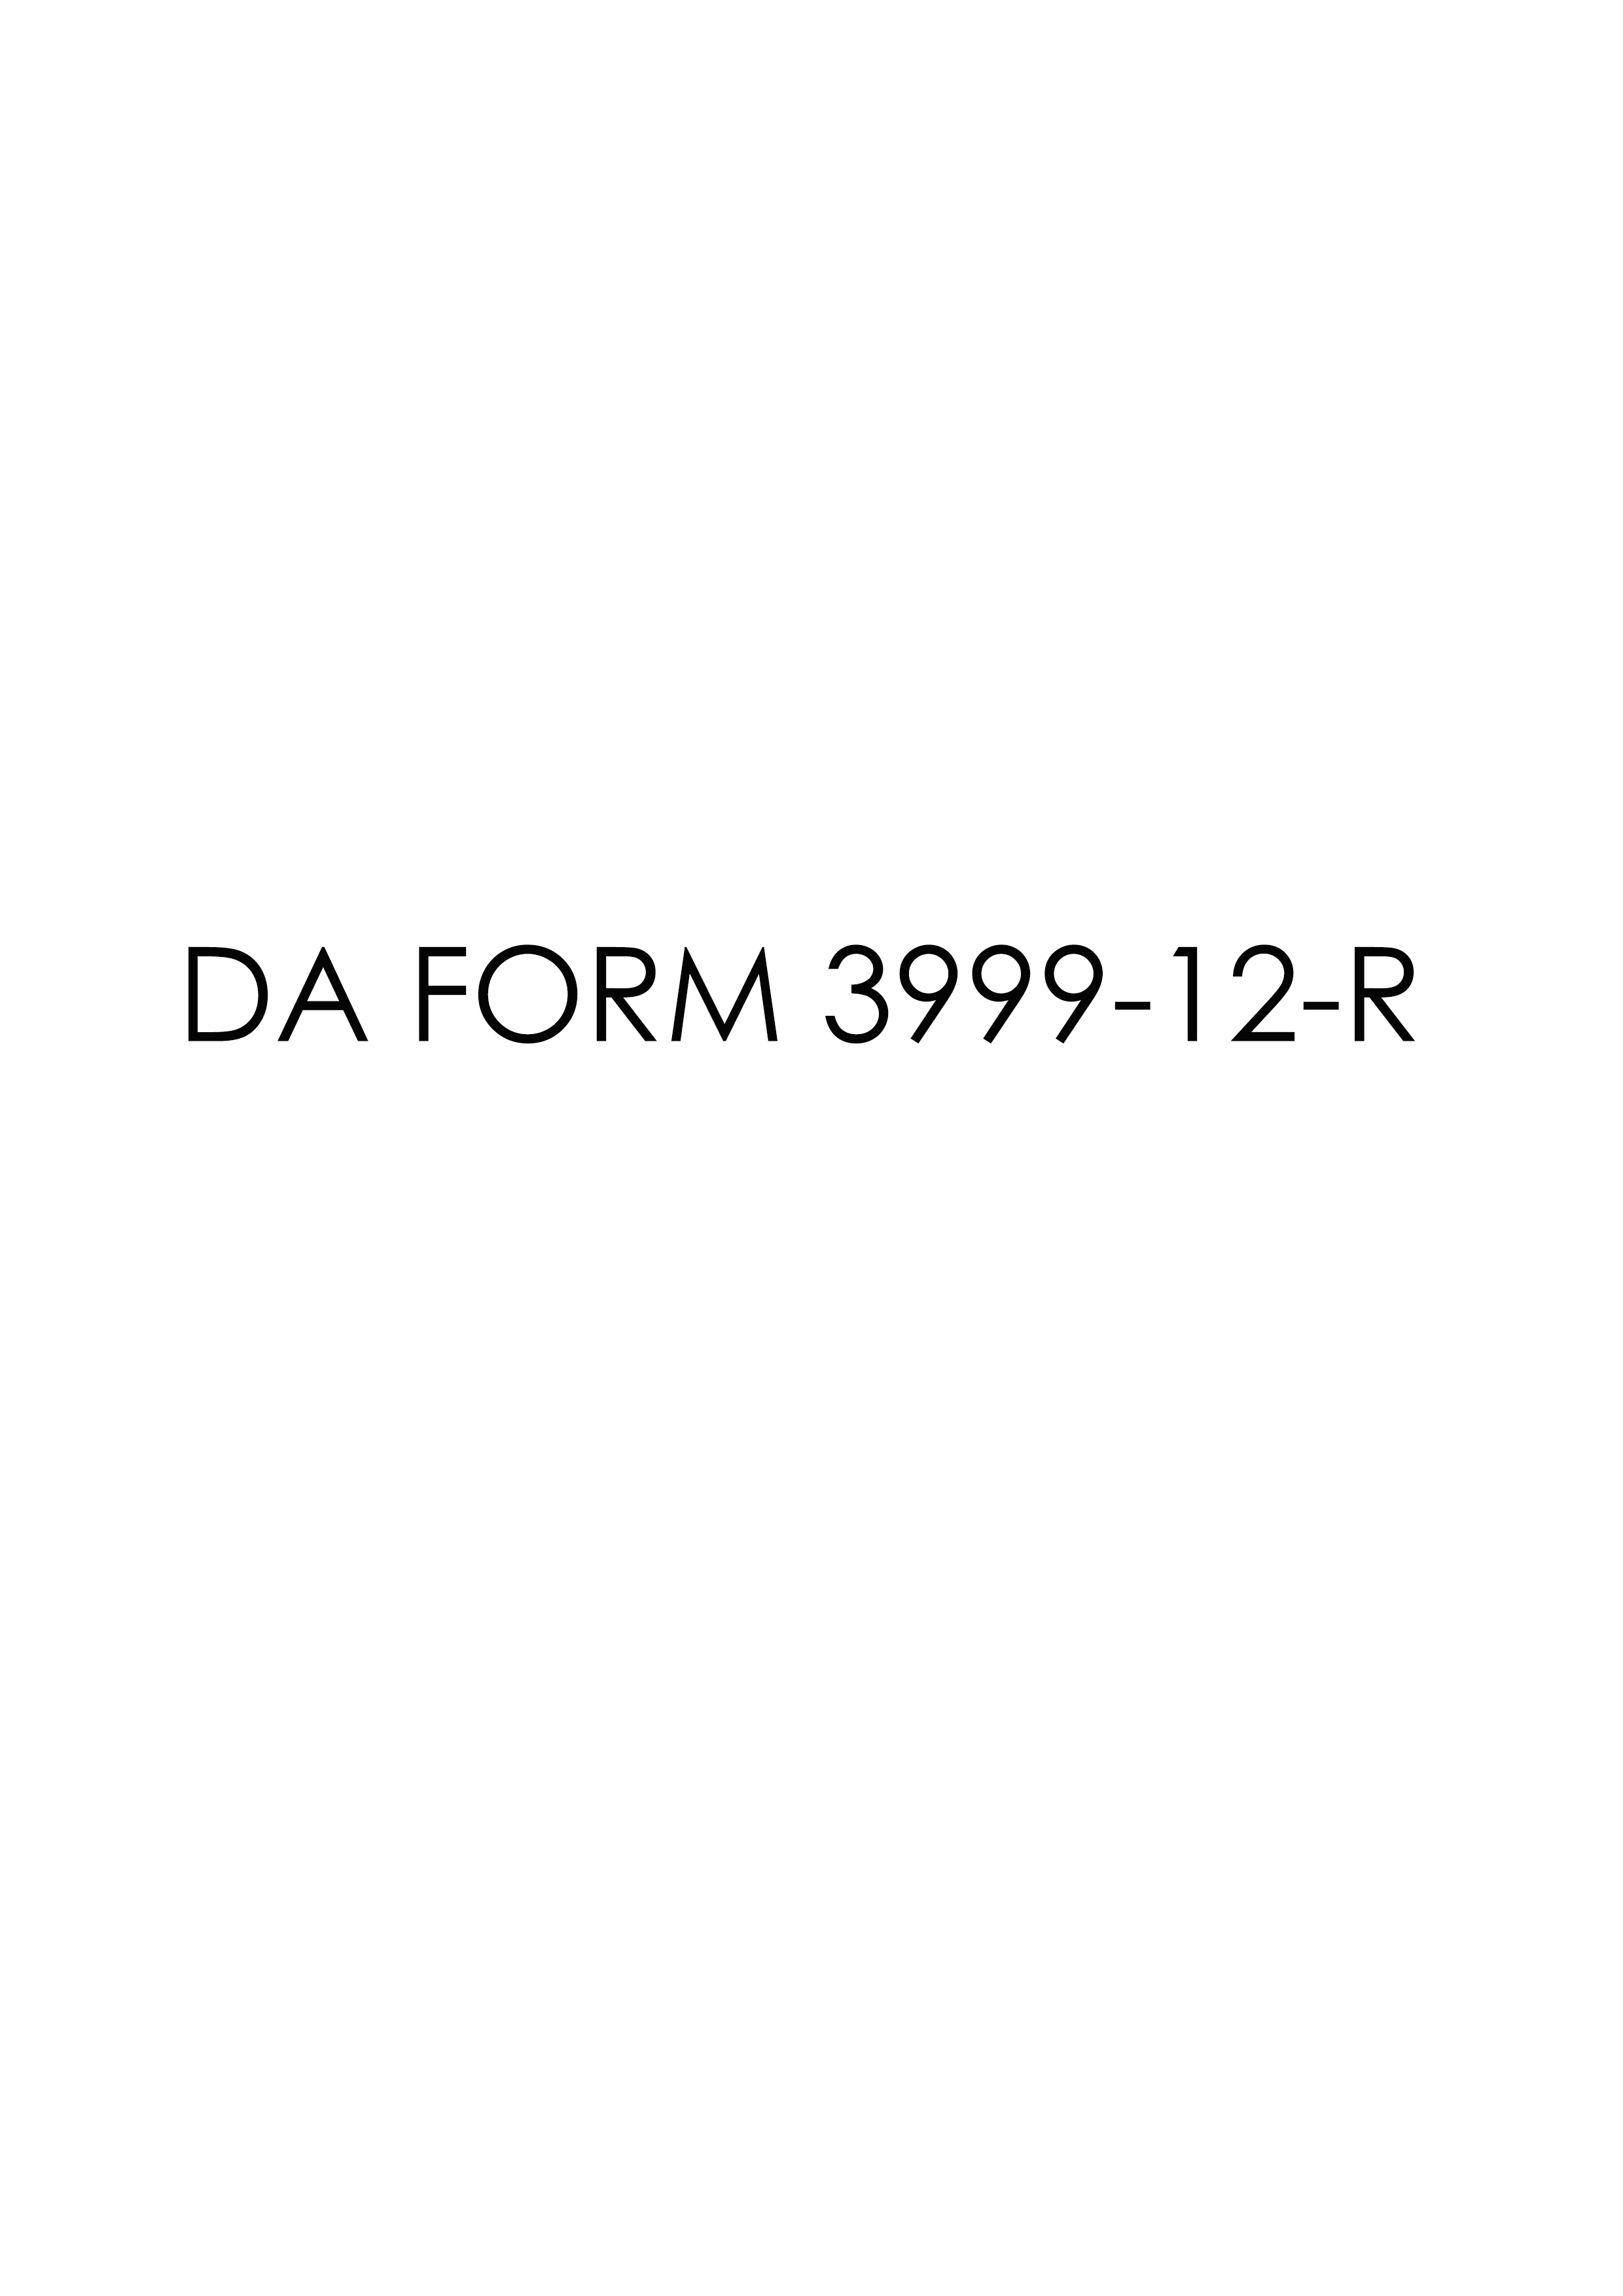 da Form 3999-12-R fillable